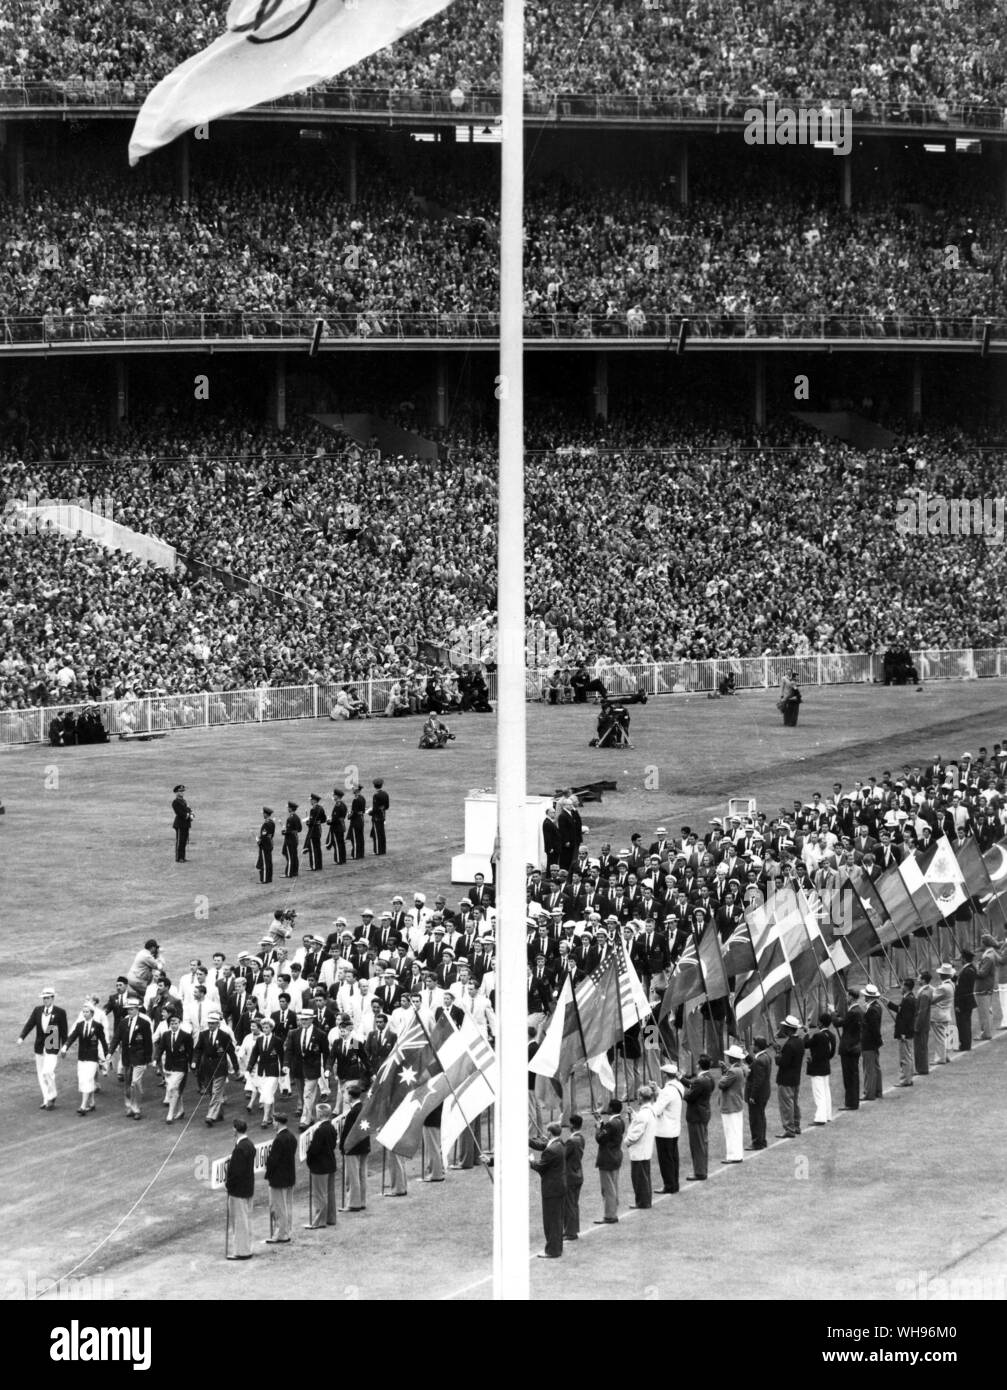 Aus., Melbourne, Olympics, 1956: Closing ceremony Stock Photo